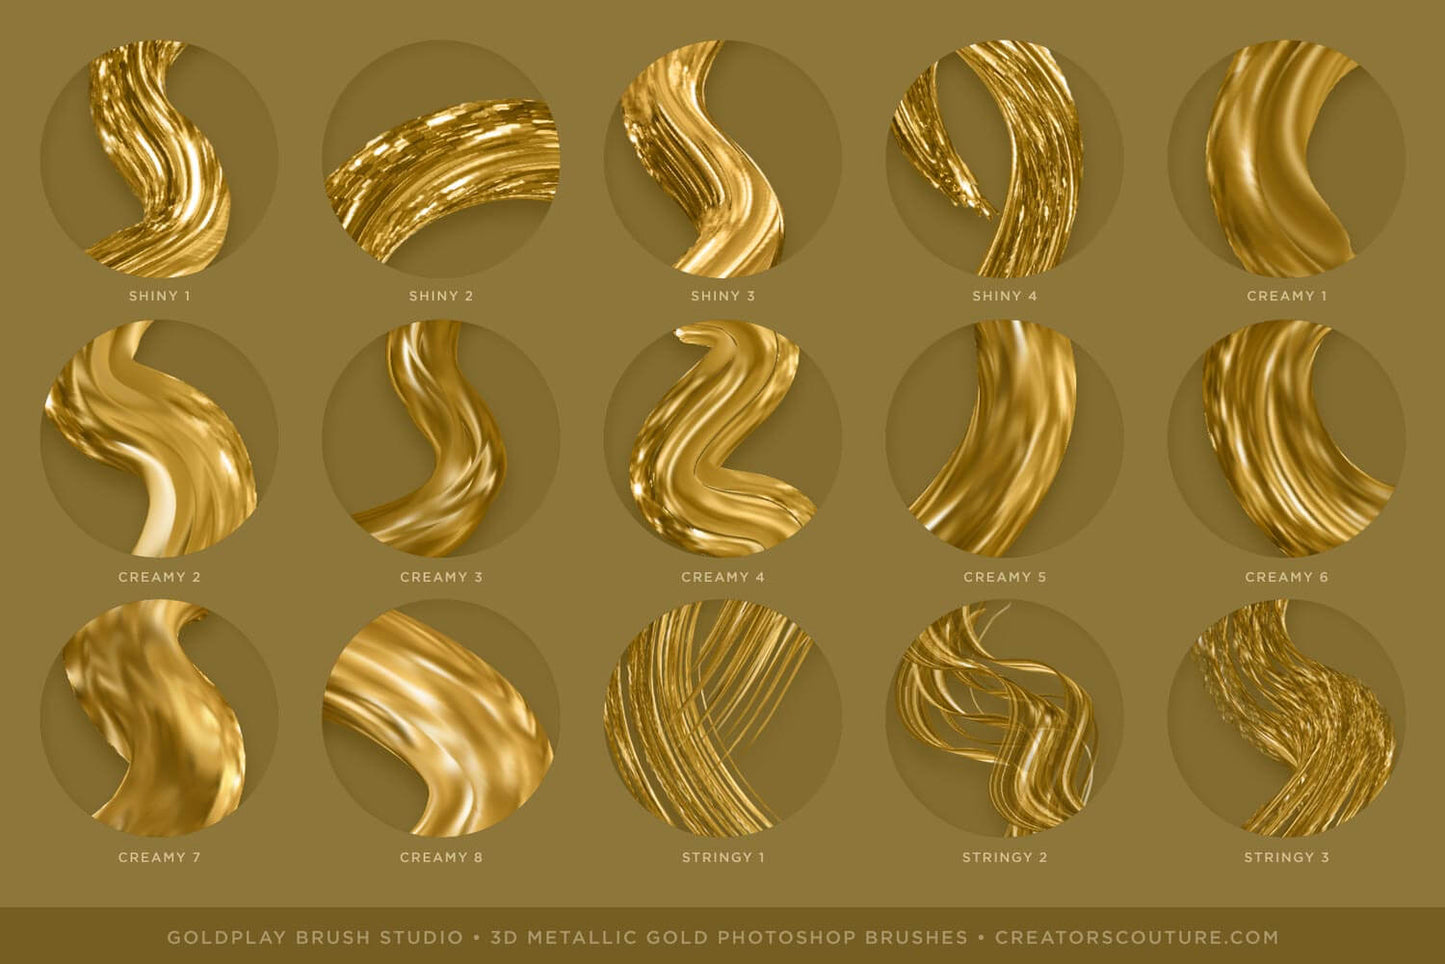 3d metallic gold photoshop effects chart 2